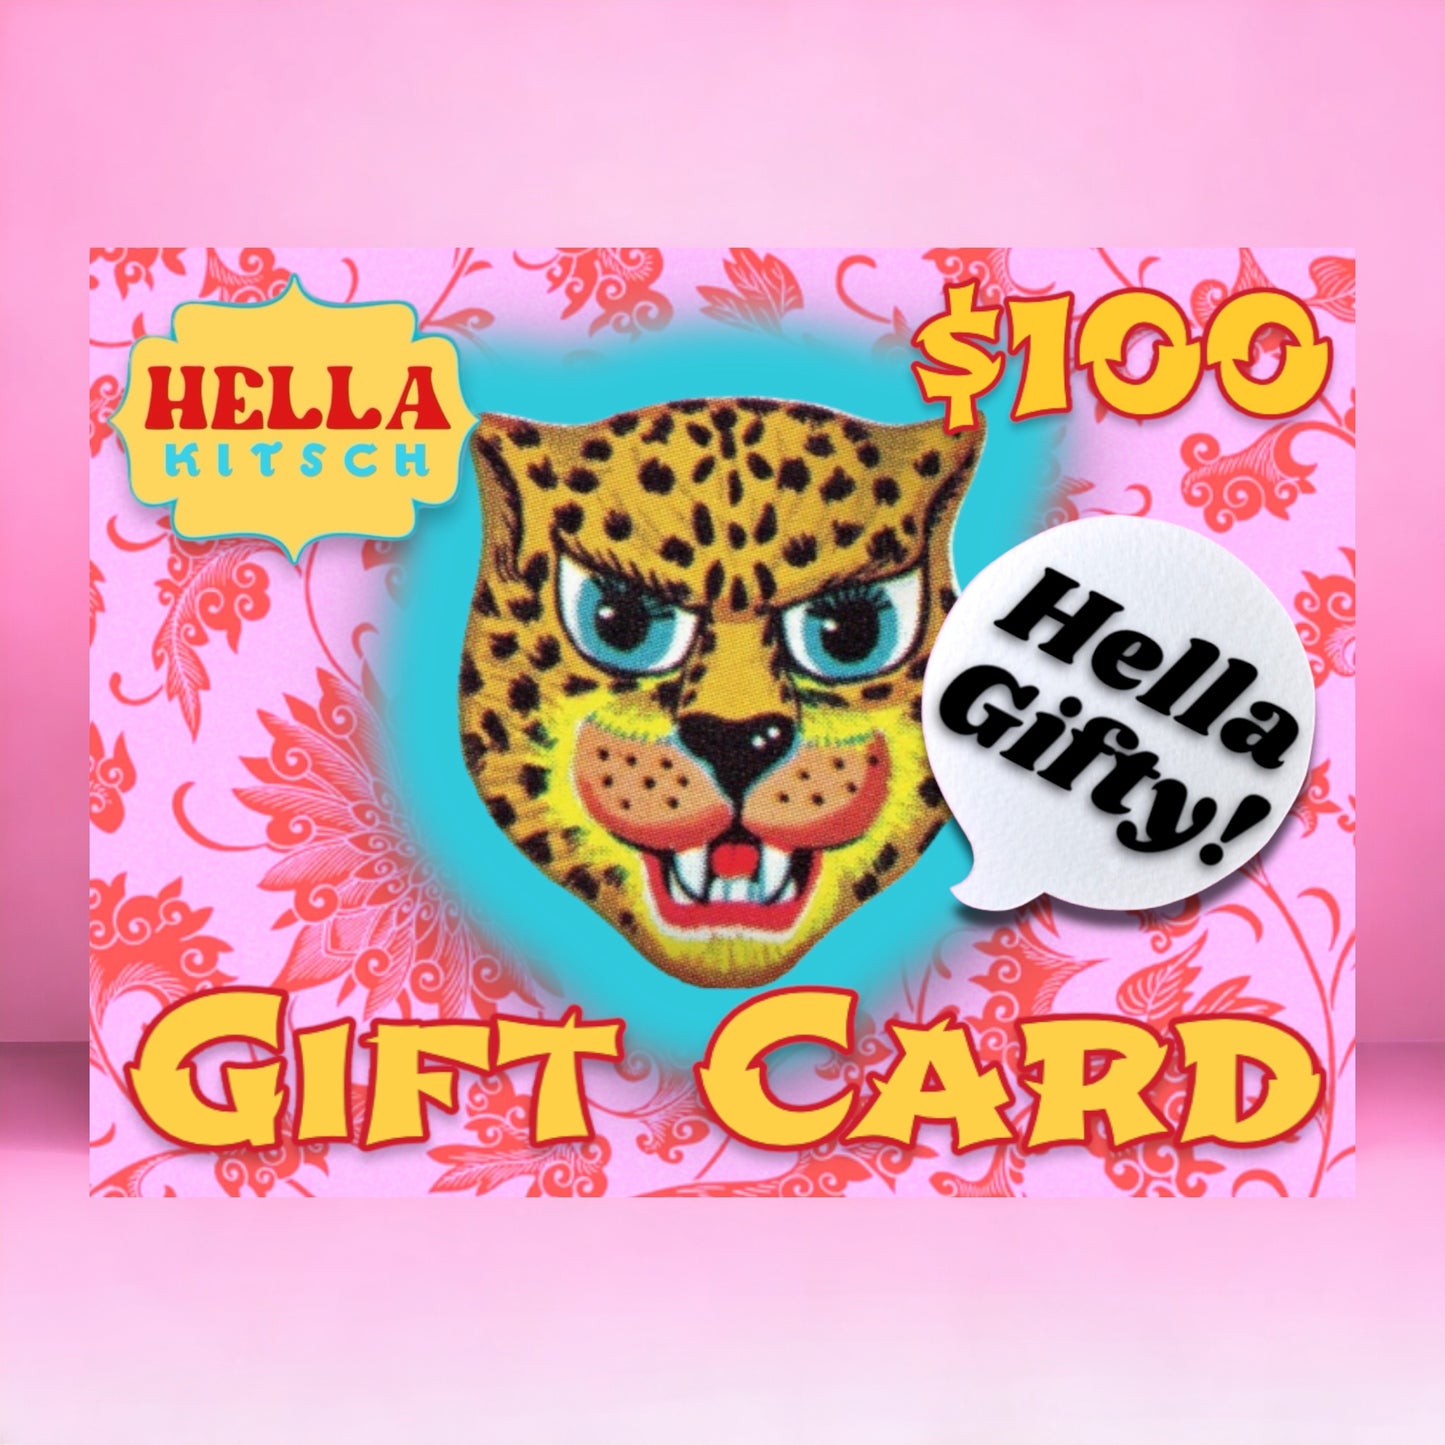 Hella Gifty - Gift Card! - Hella Kitsch